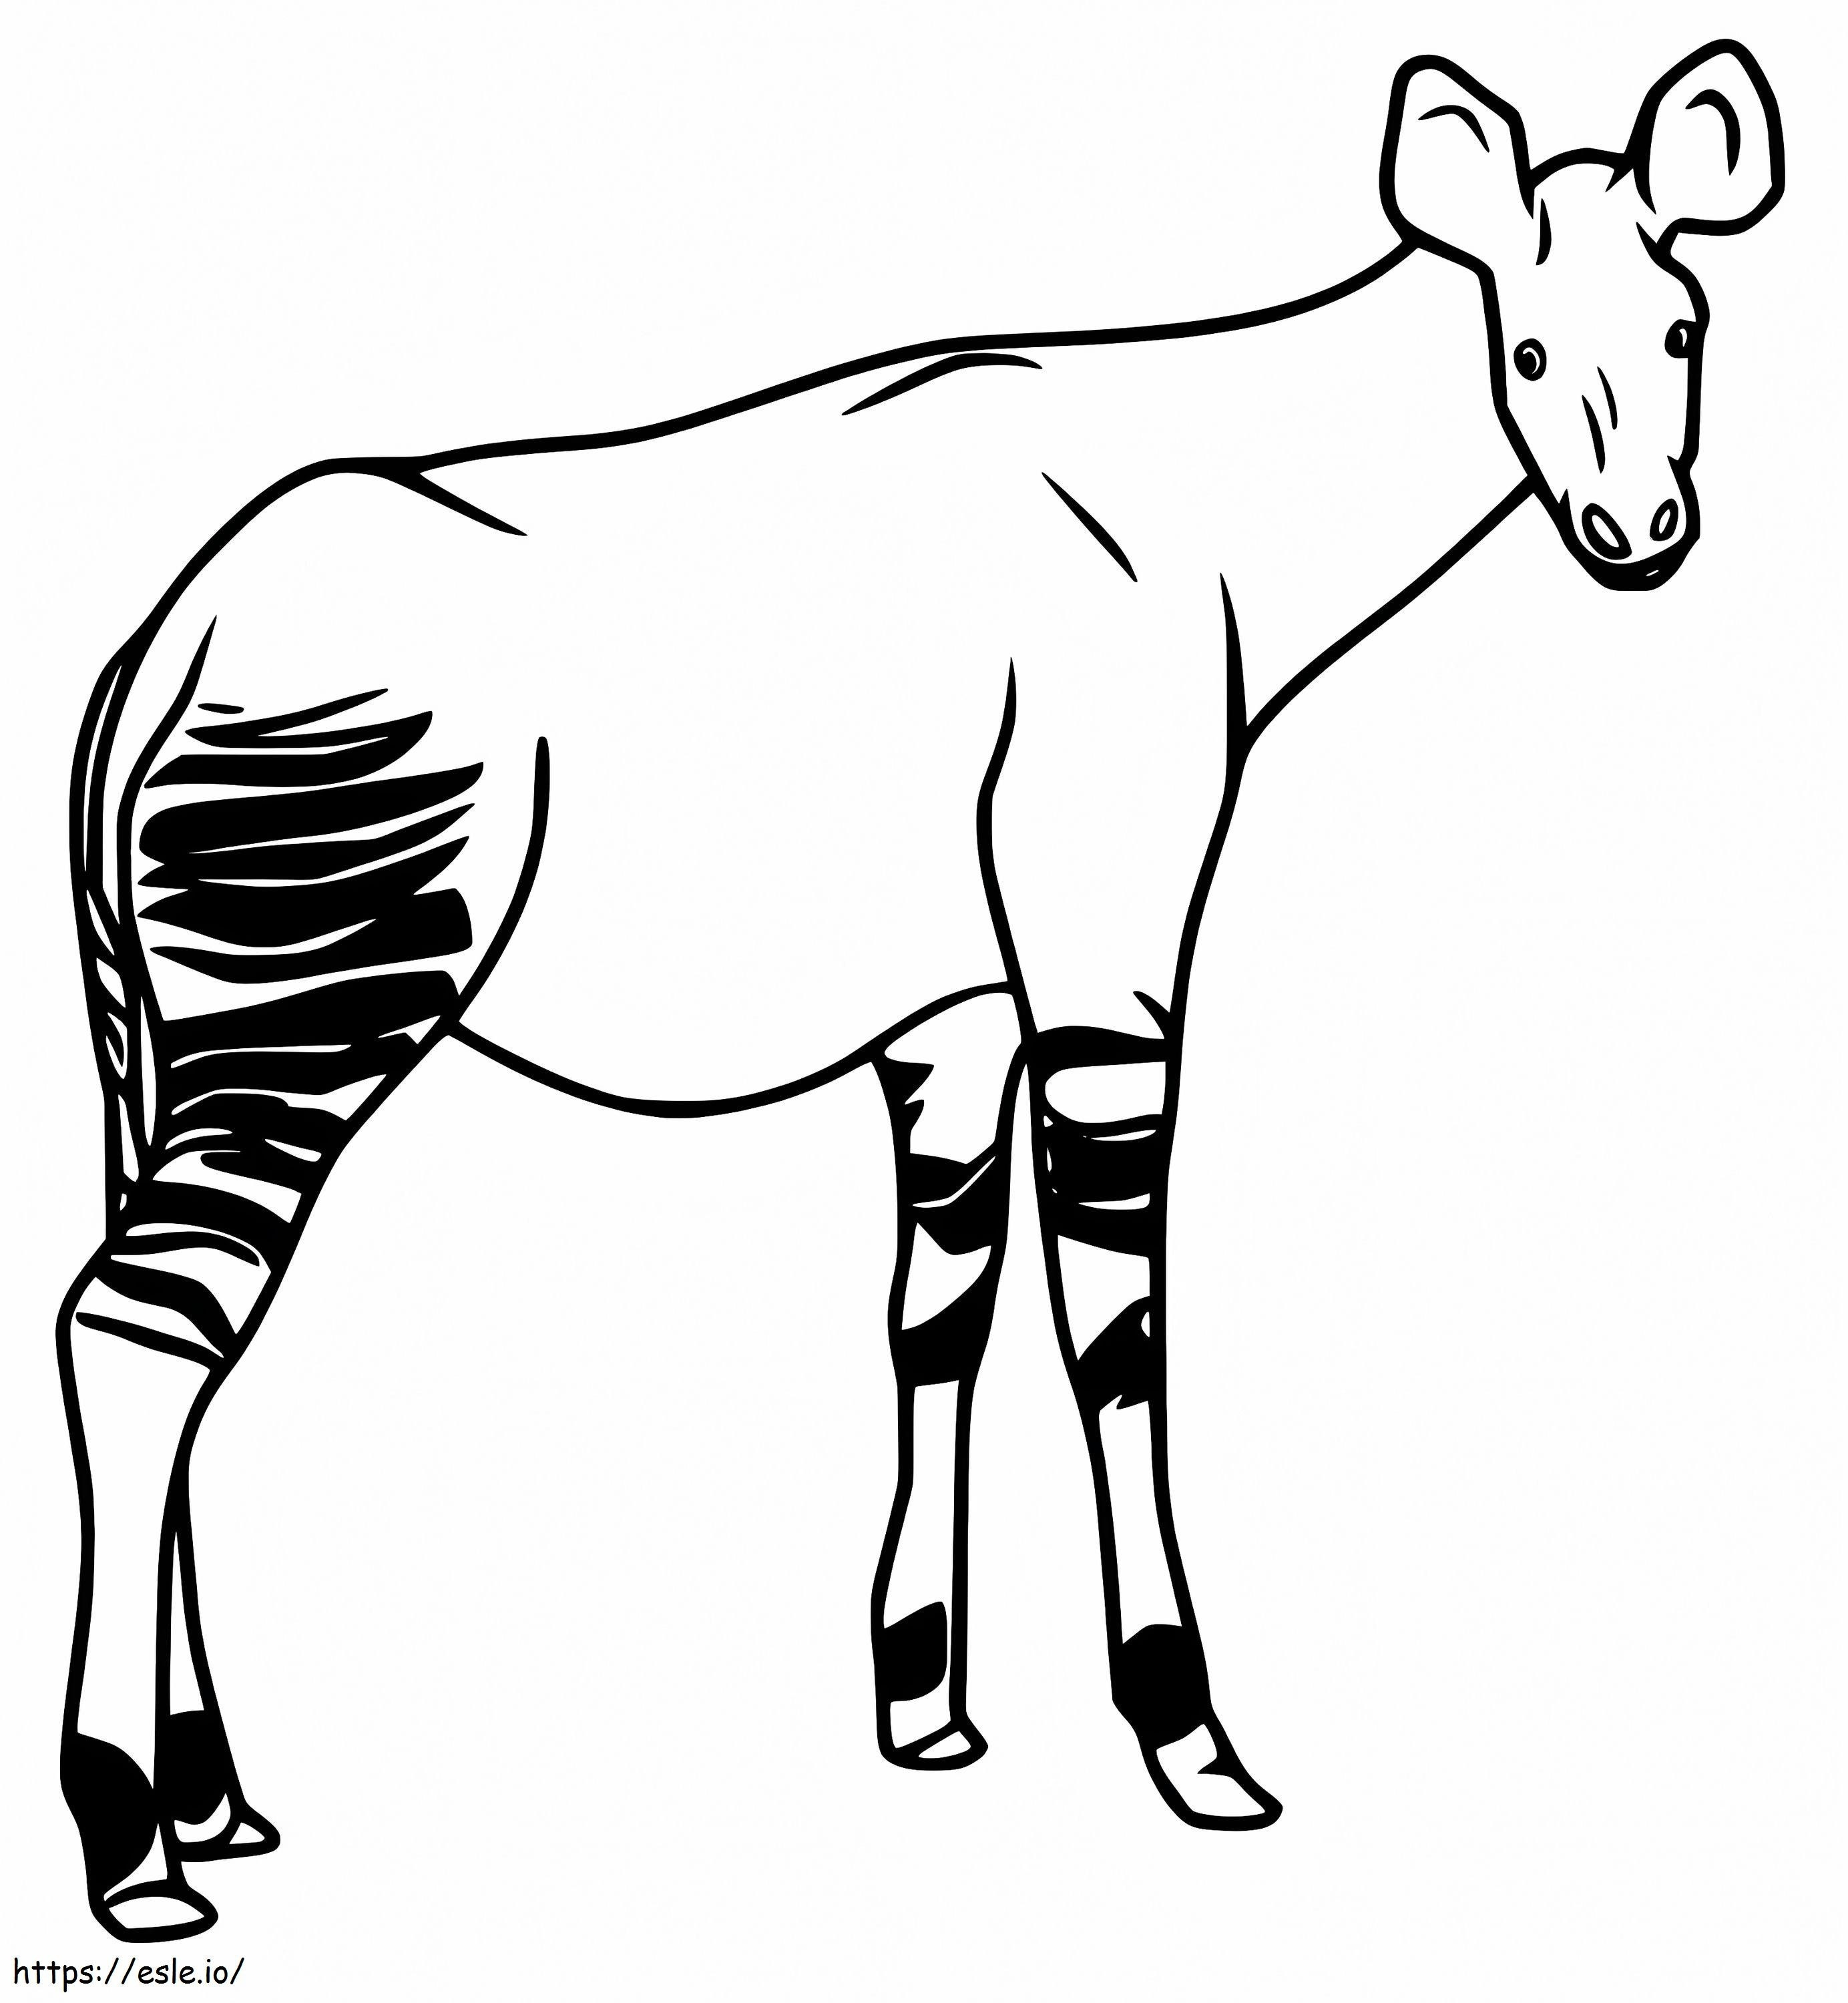 Easy Okapi coloring page